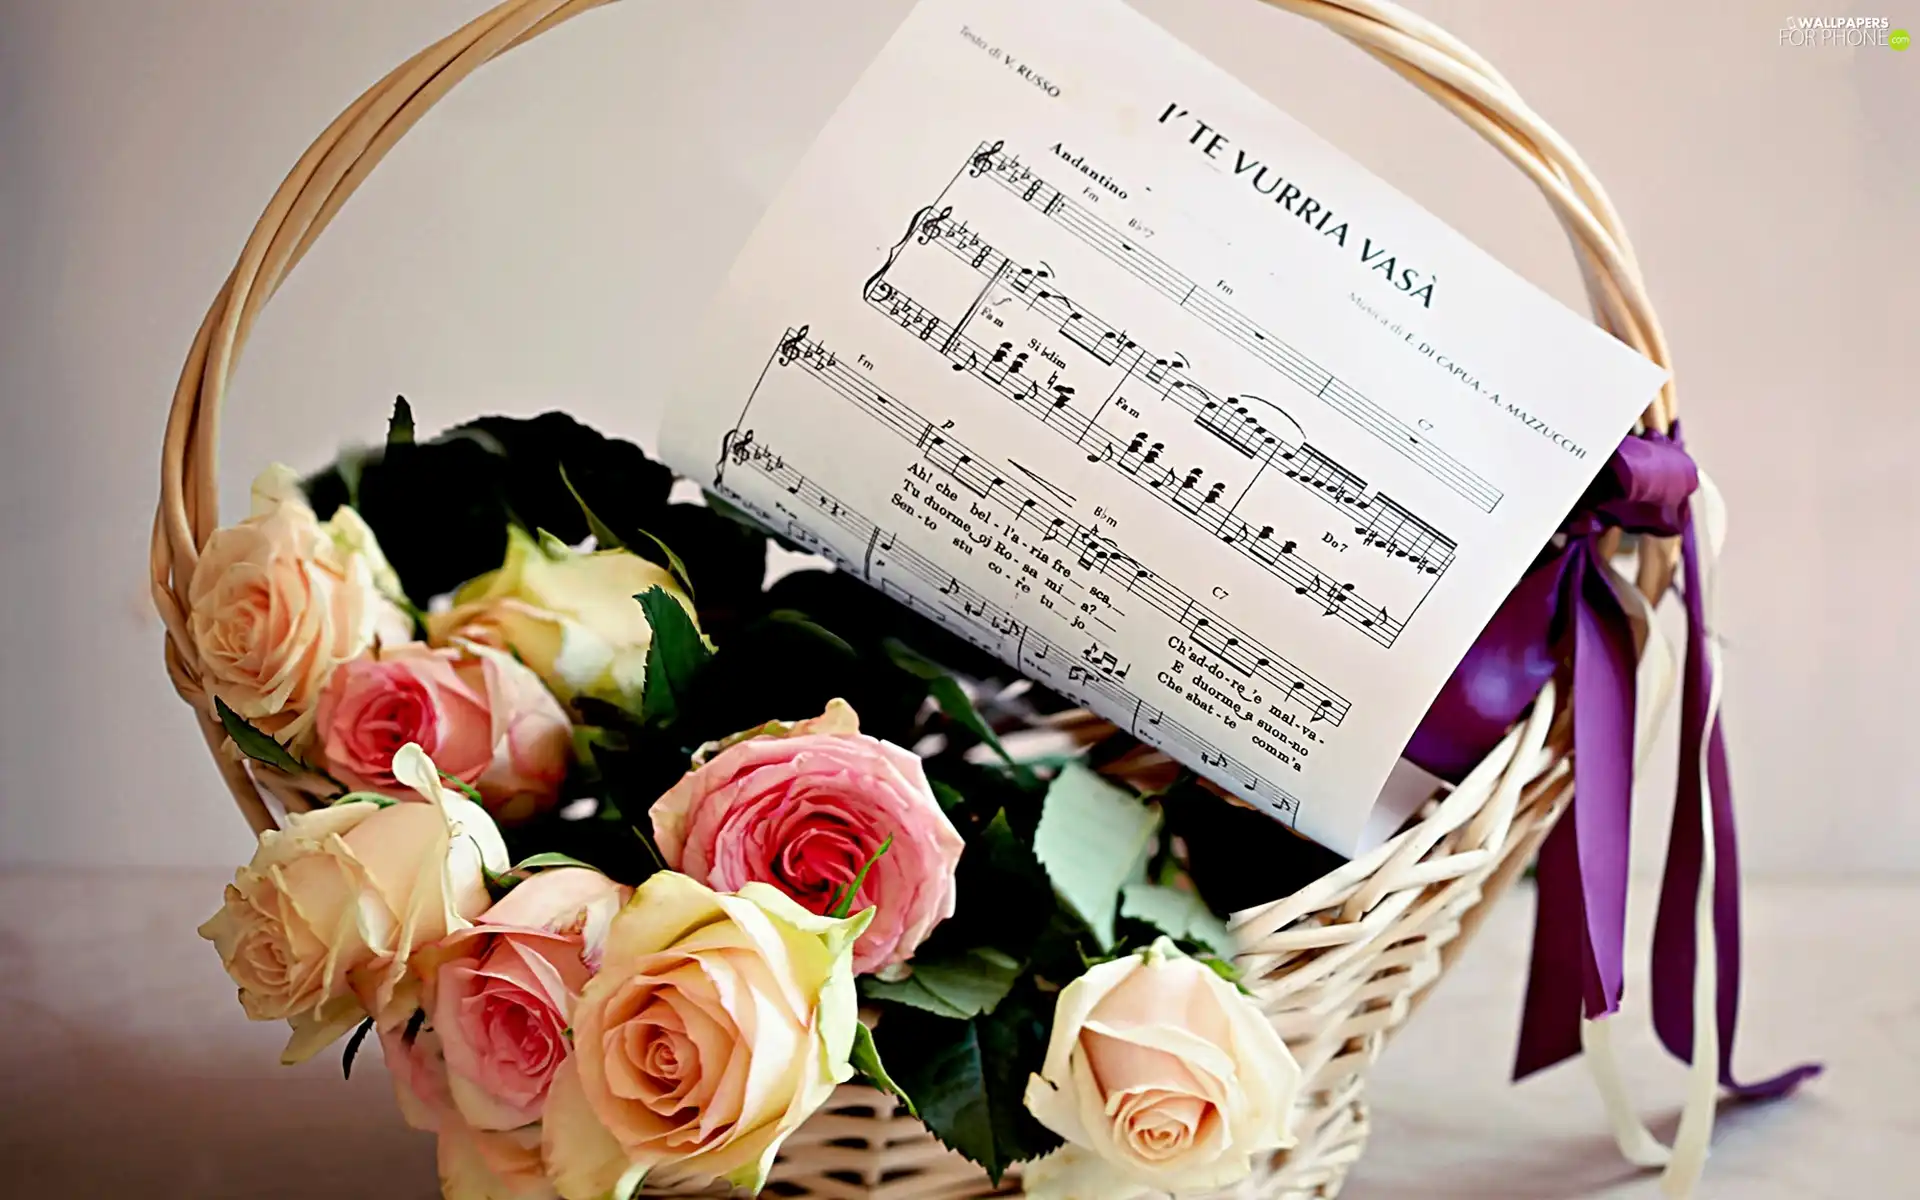 Tunes, roses, basket